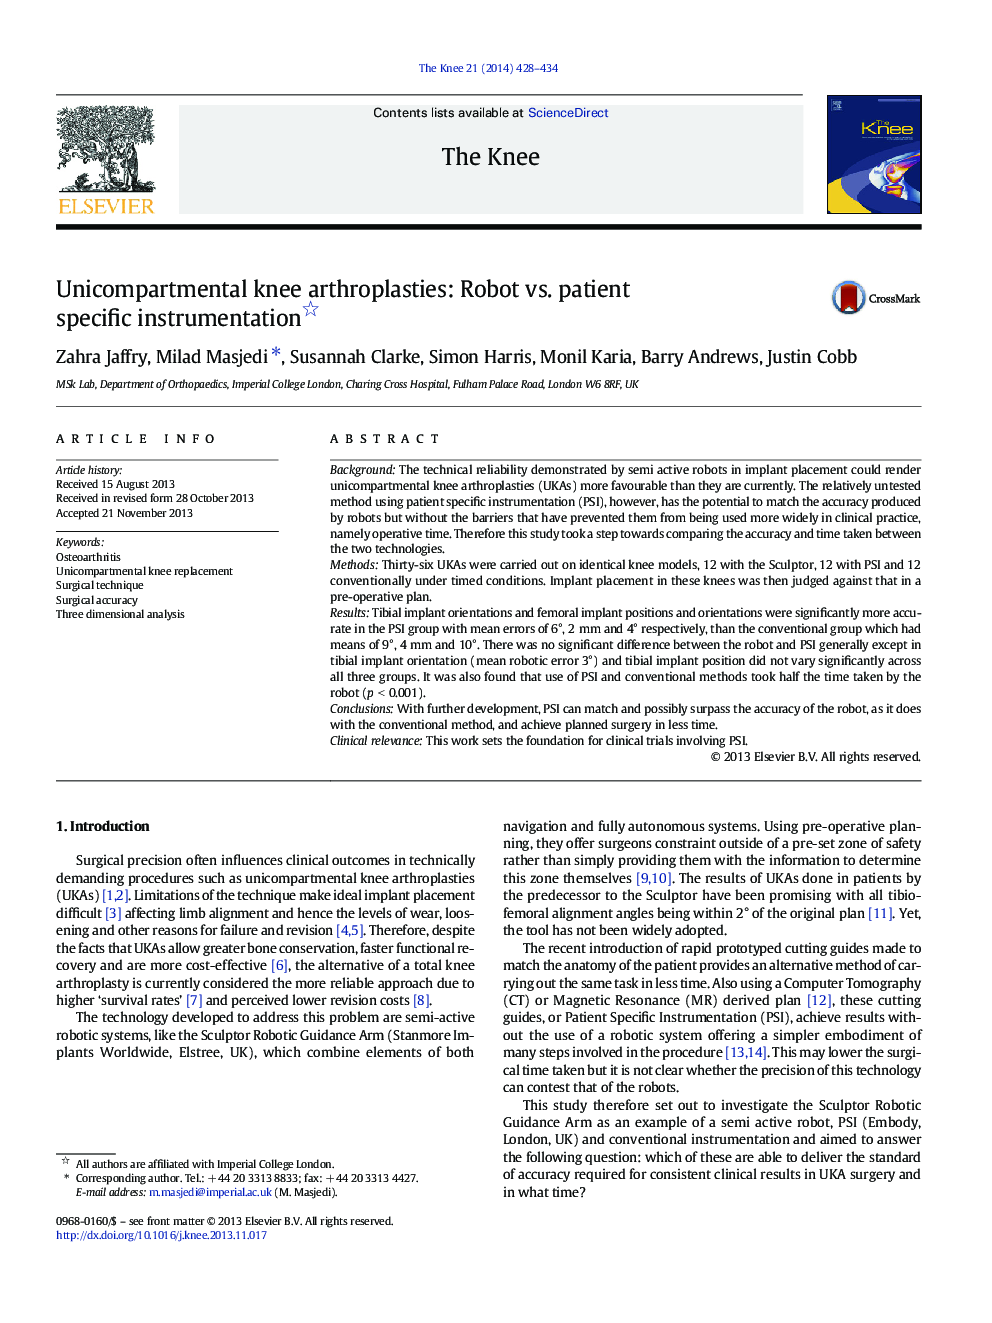 Unicompartmental knee arthroplasties: Robot vs. patient specific instrumentation 